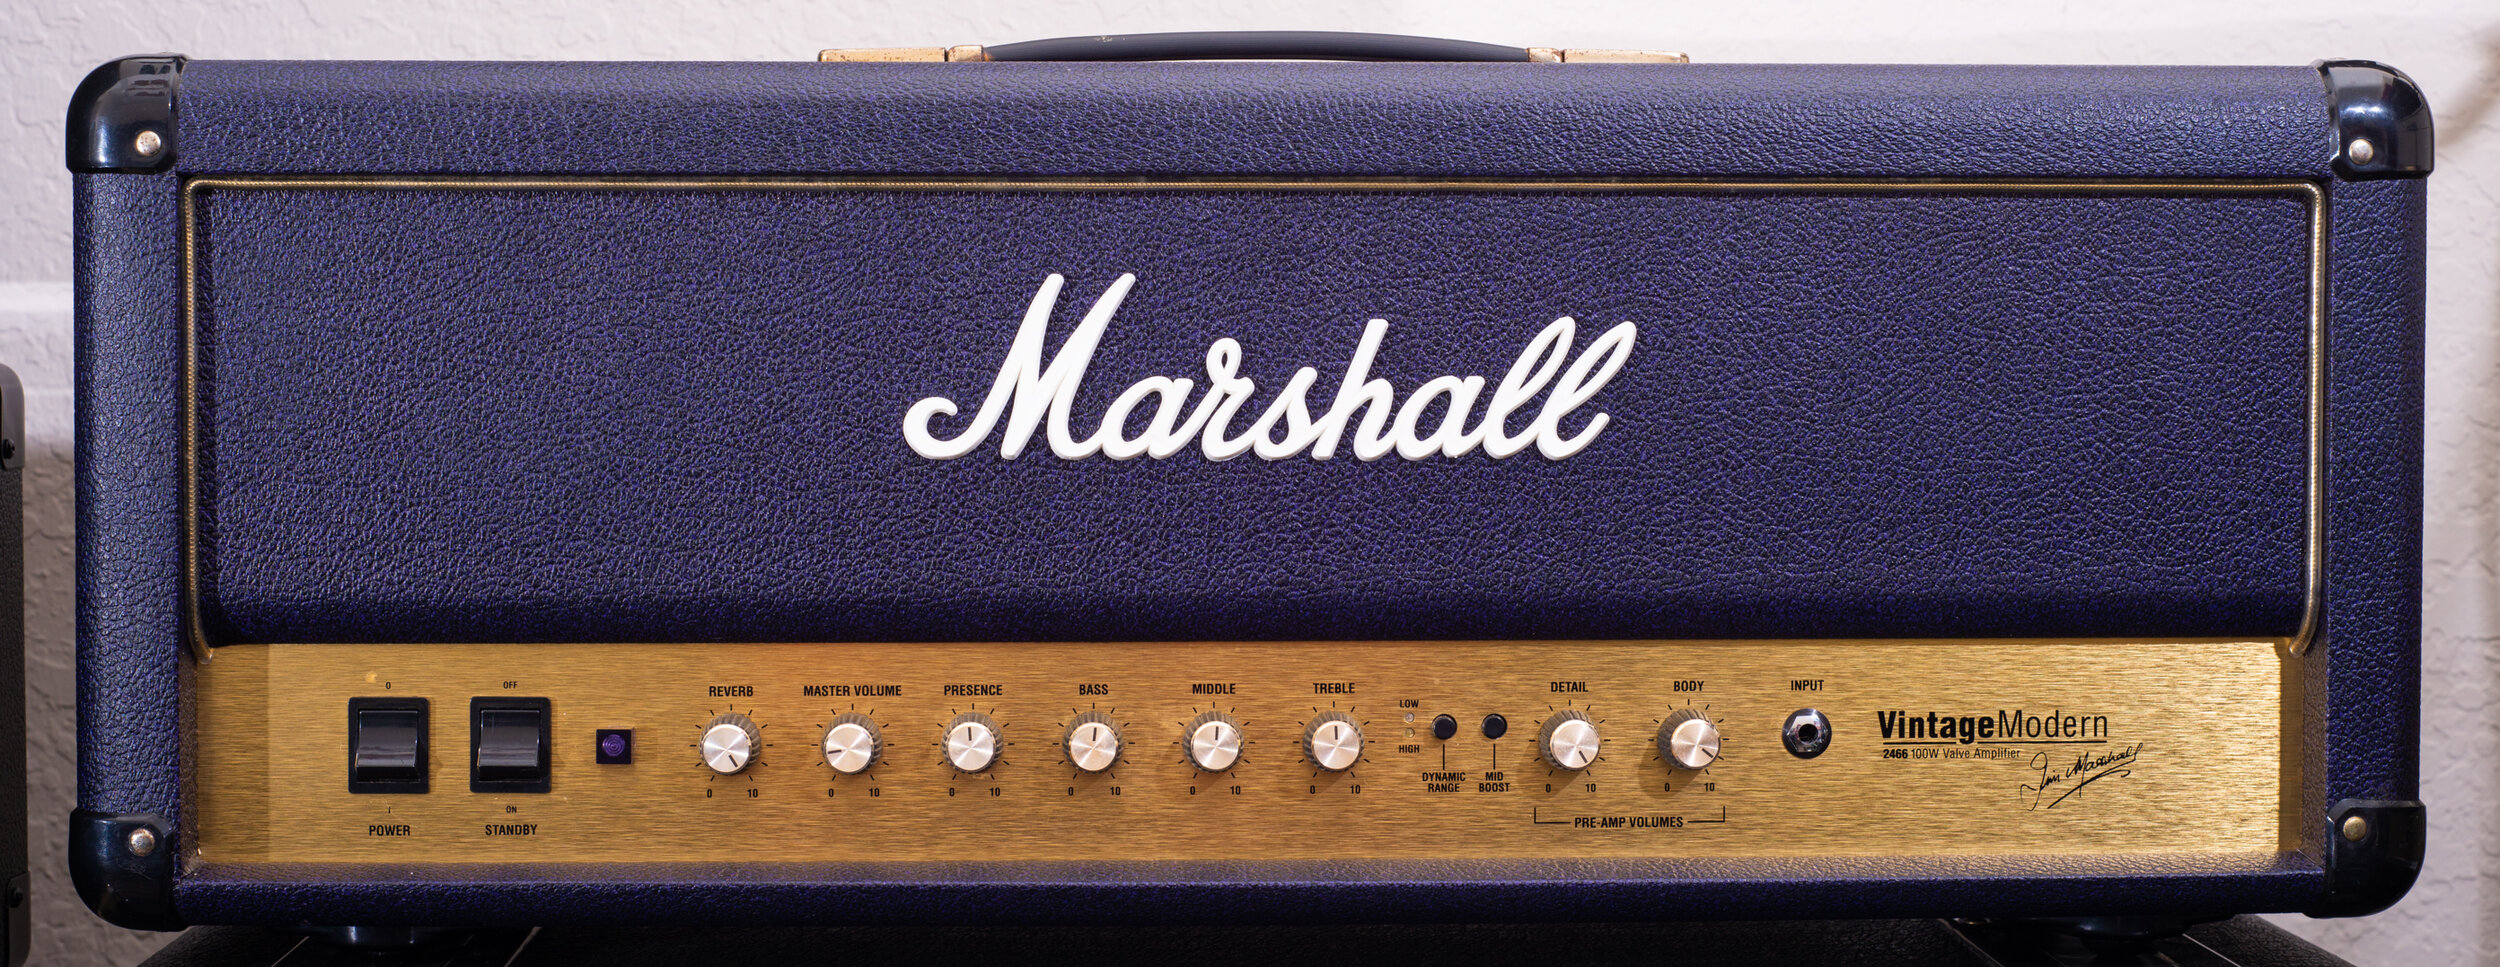 New Amp: Marshall Vintage Modern 2466 — Totally Rad Guitars